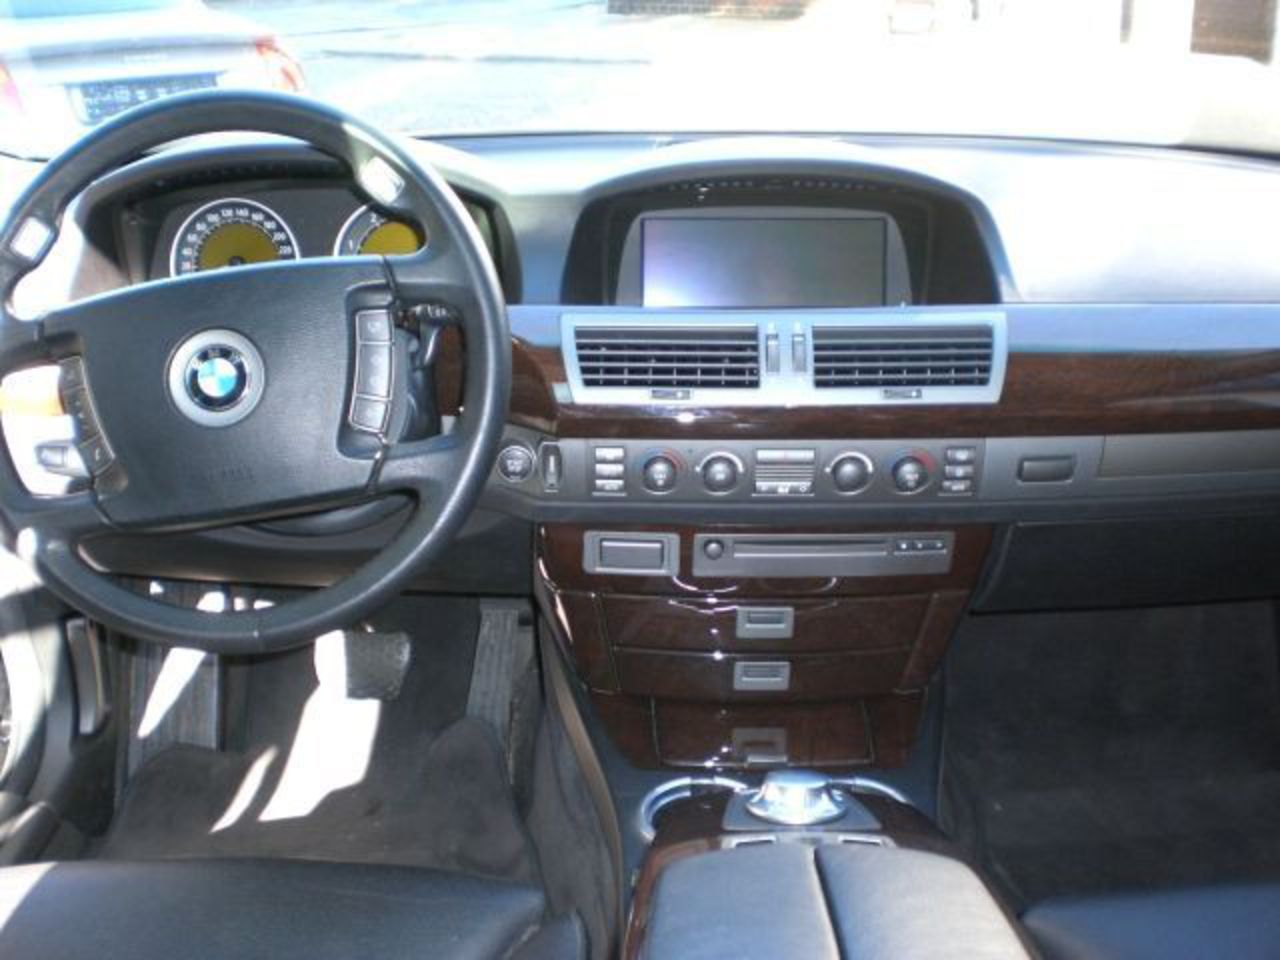 File:BMW 740d (F01) rear 20100724.jpg - Wikimedia Commons